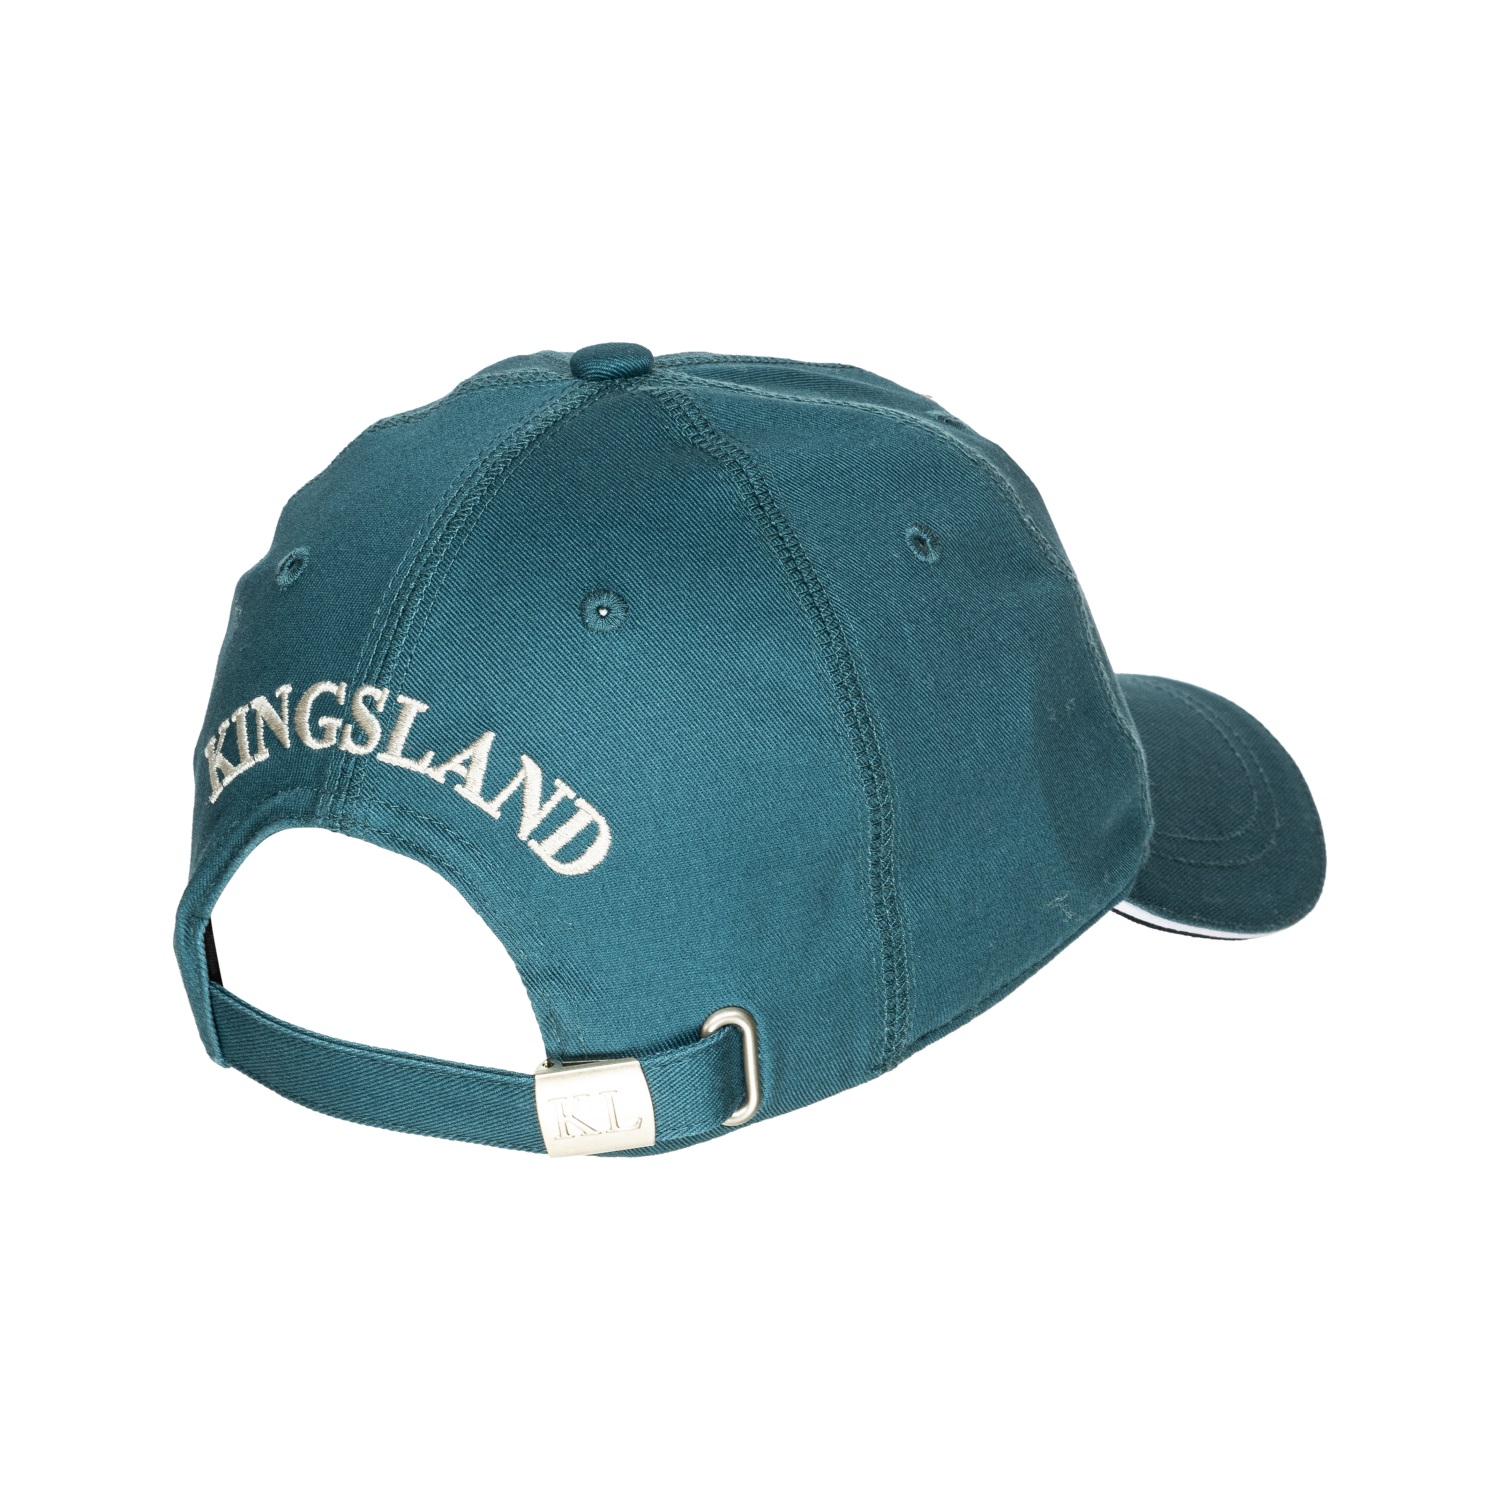 KINGSLAND Unisex Classic Limited Cap, Basecap - green deep - onesize - 8